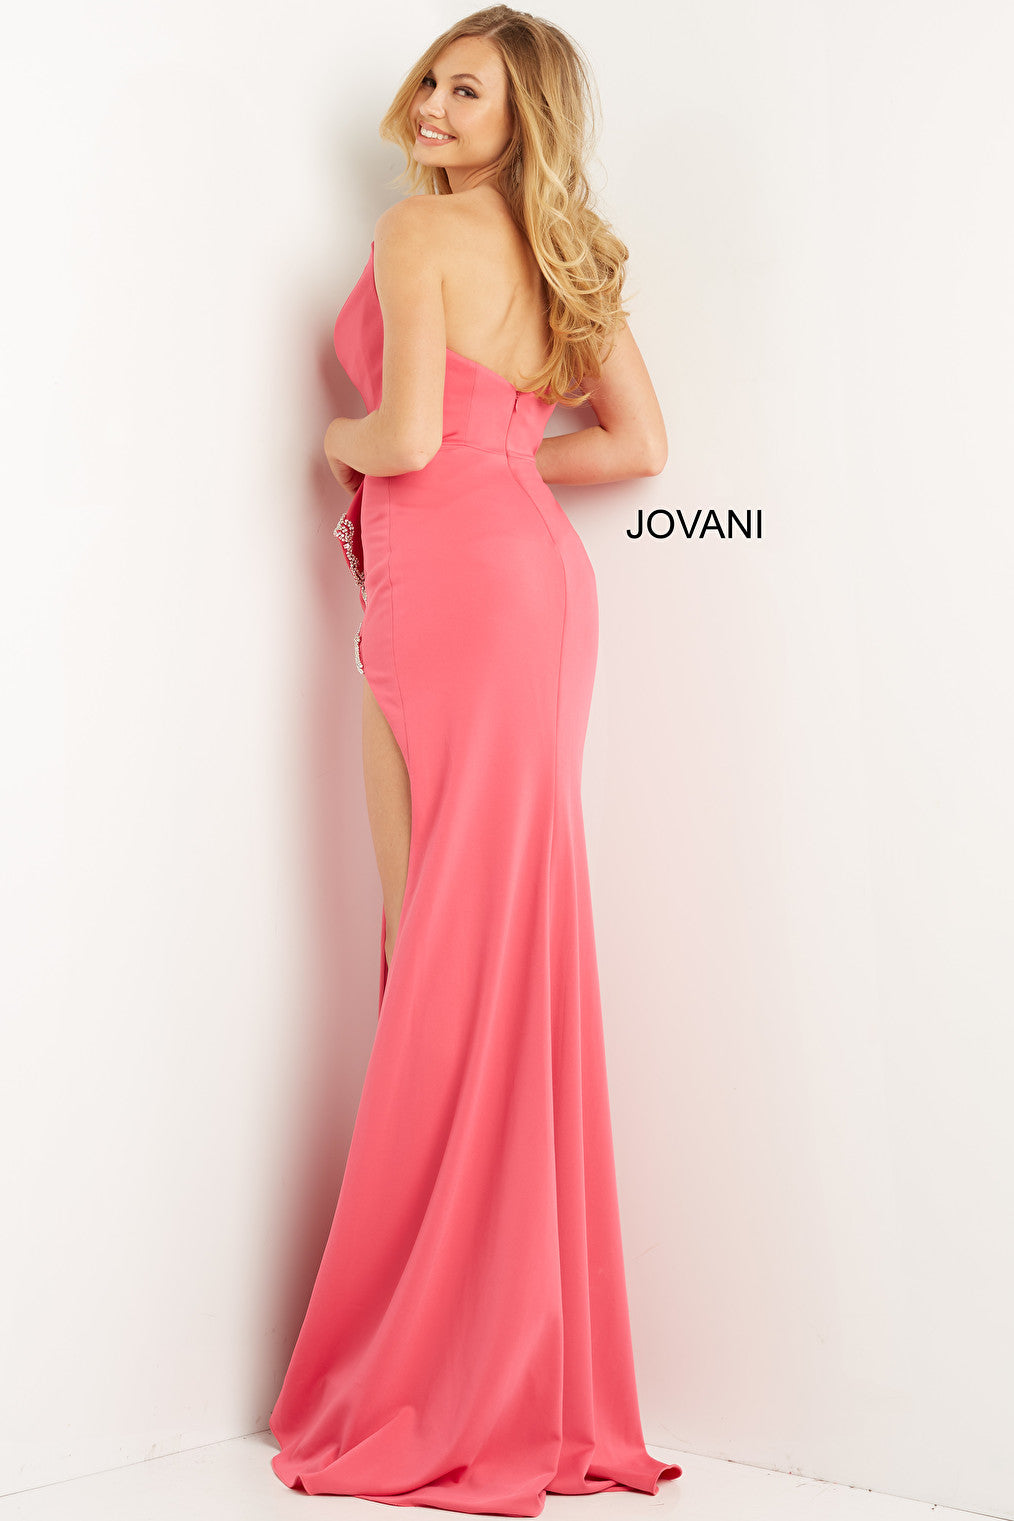 Body hugging hot pink Jovani prom dress 07323